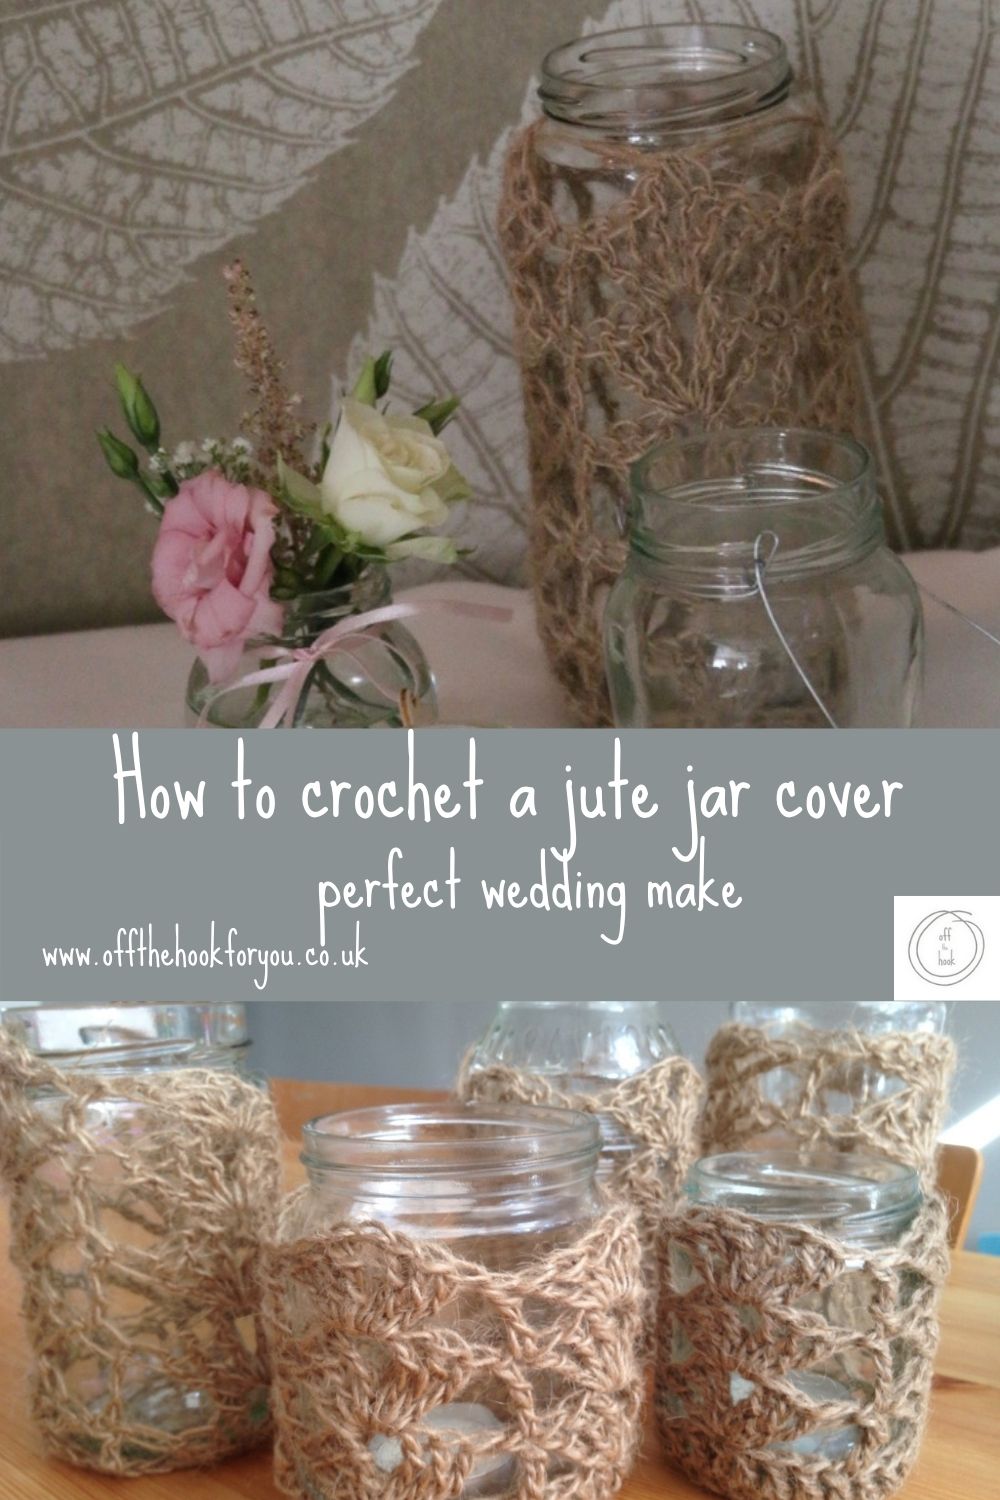 crochet jar cover using jute twine - wedding crochet